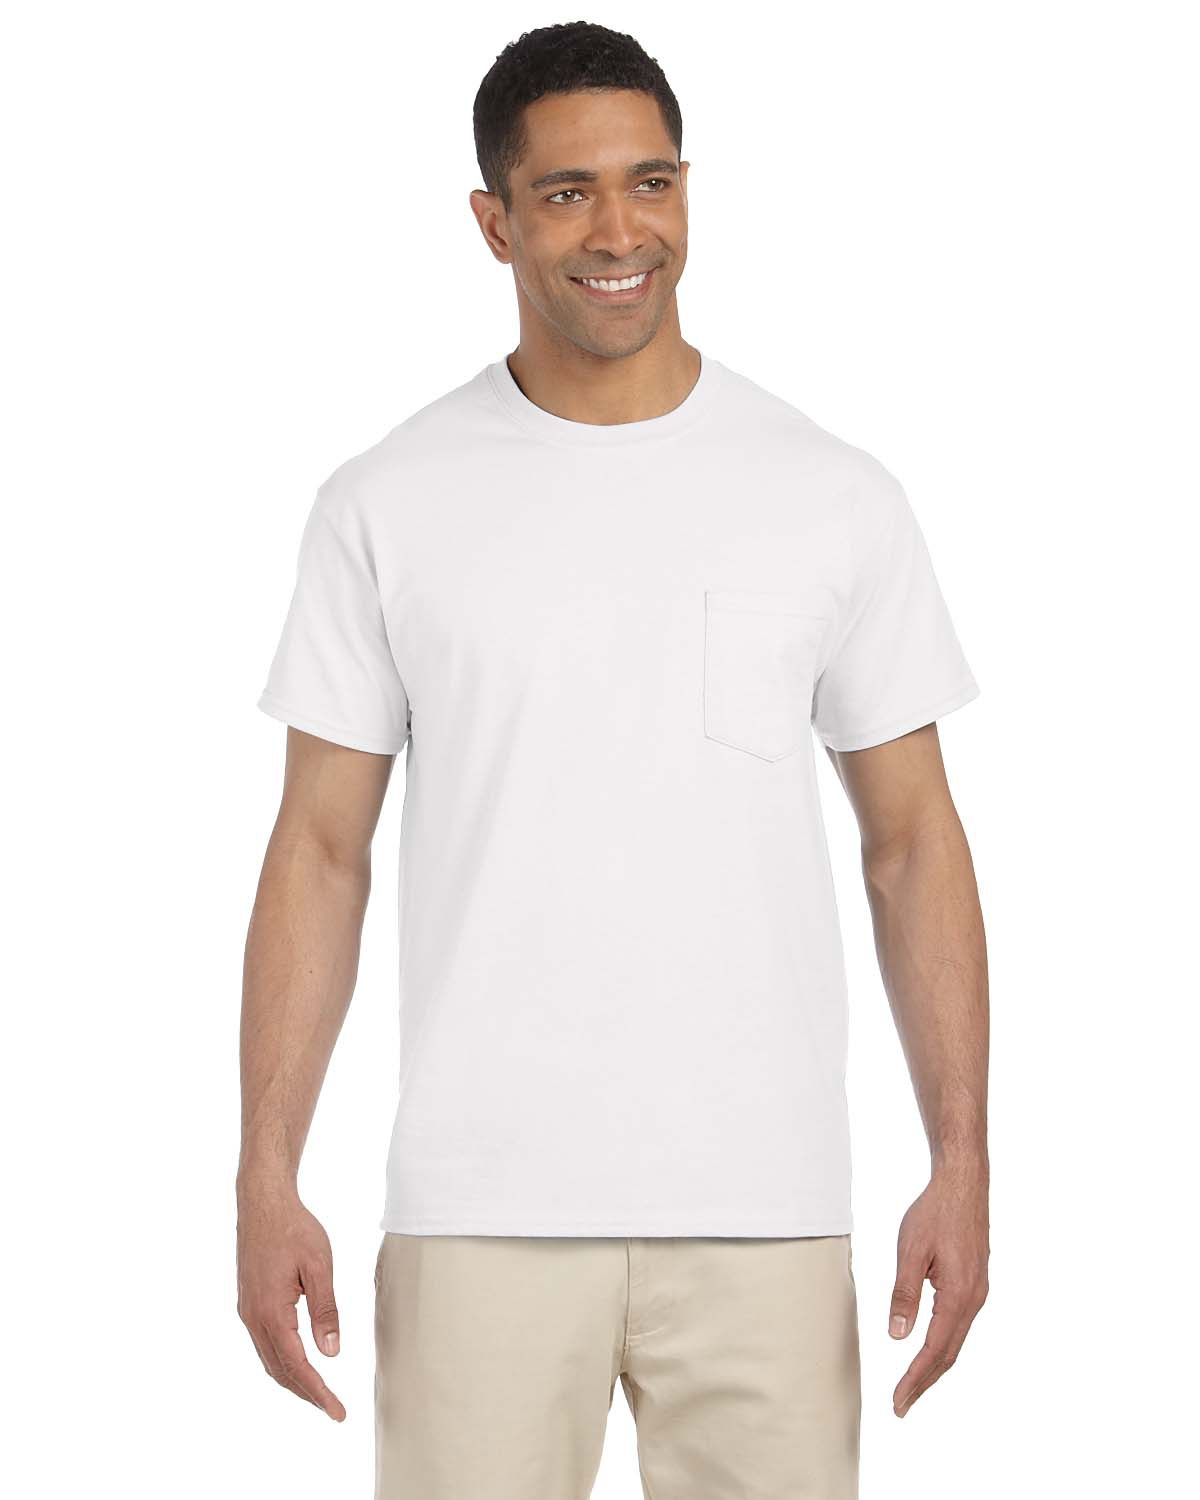 GILDAN T-Shirt Grey LOT 6 SHIRTS Adult XXXL SILK SCREEN tee New Old Stock 